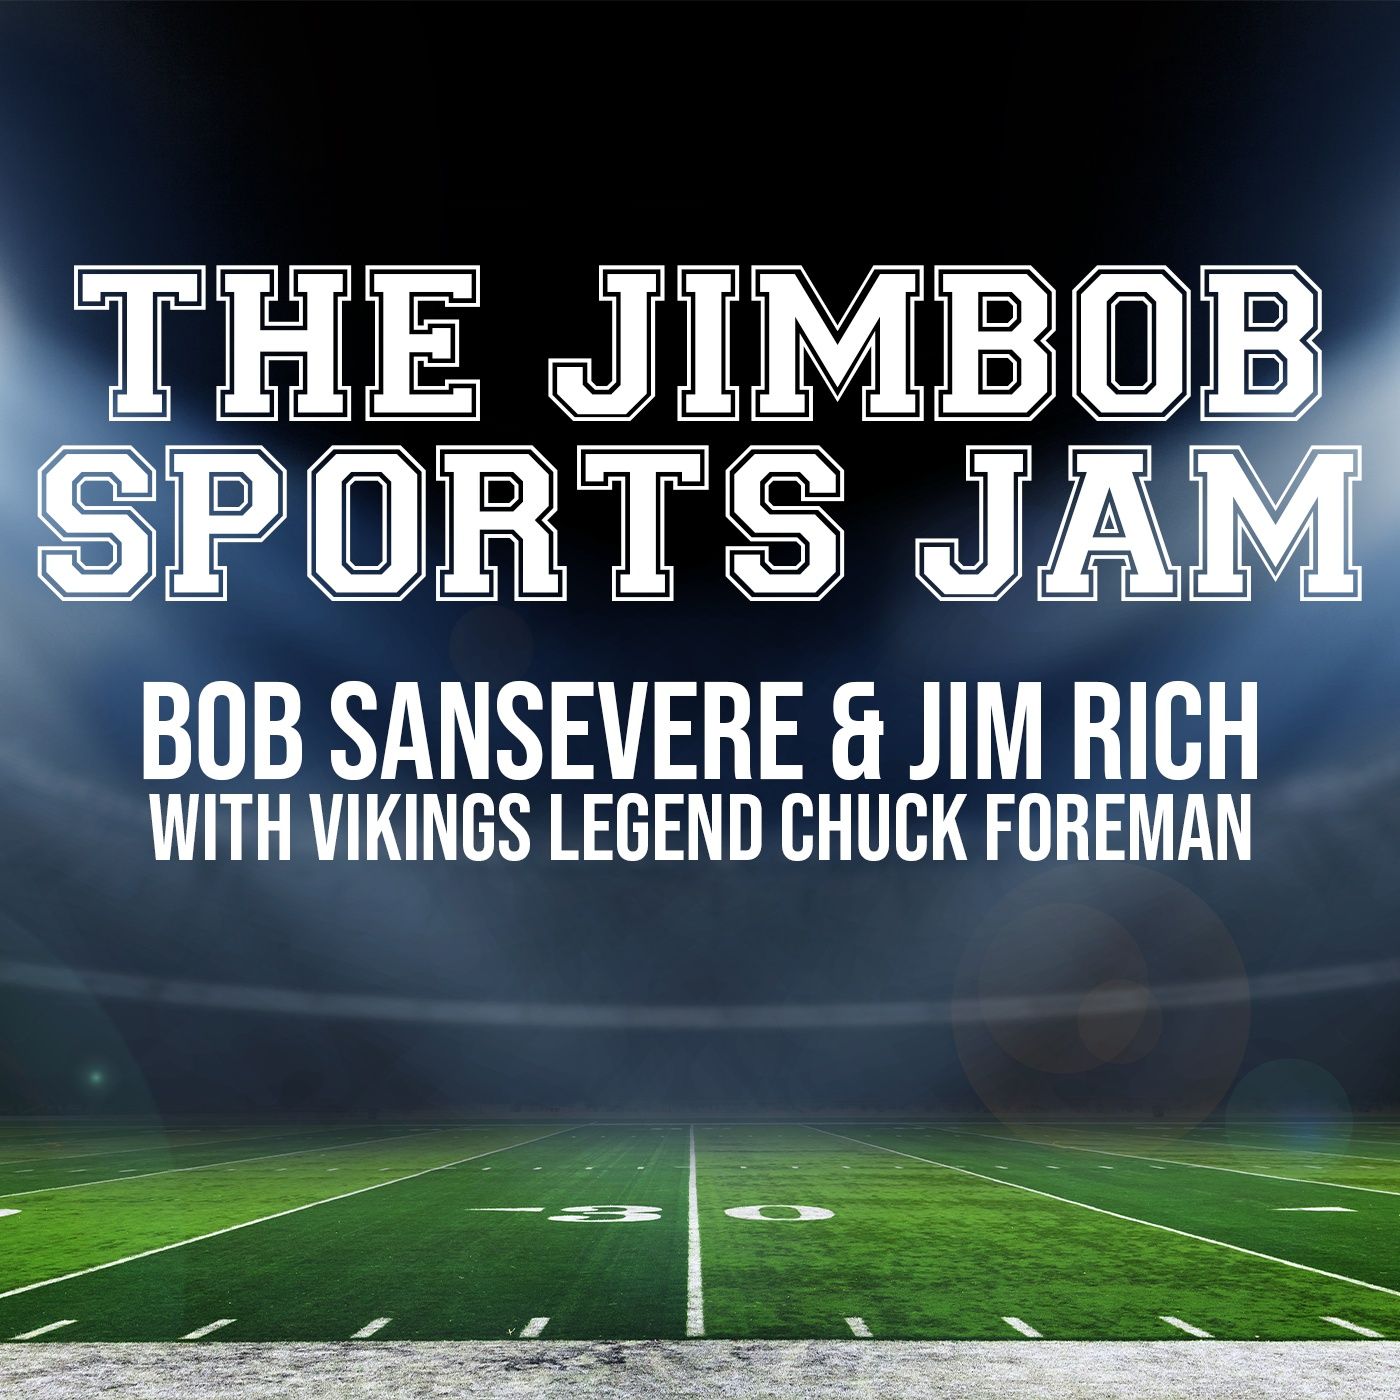 The JimBob Sports Jam